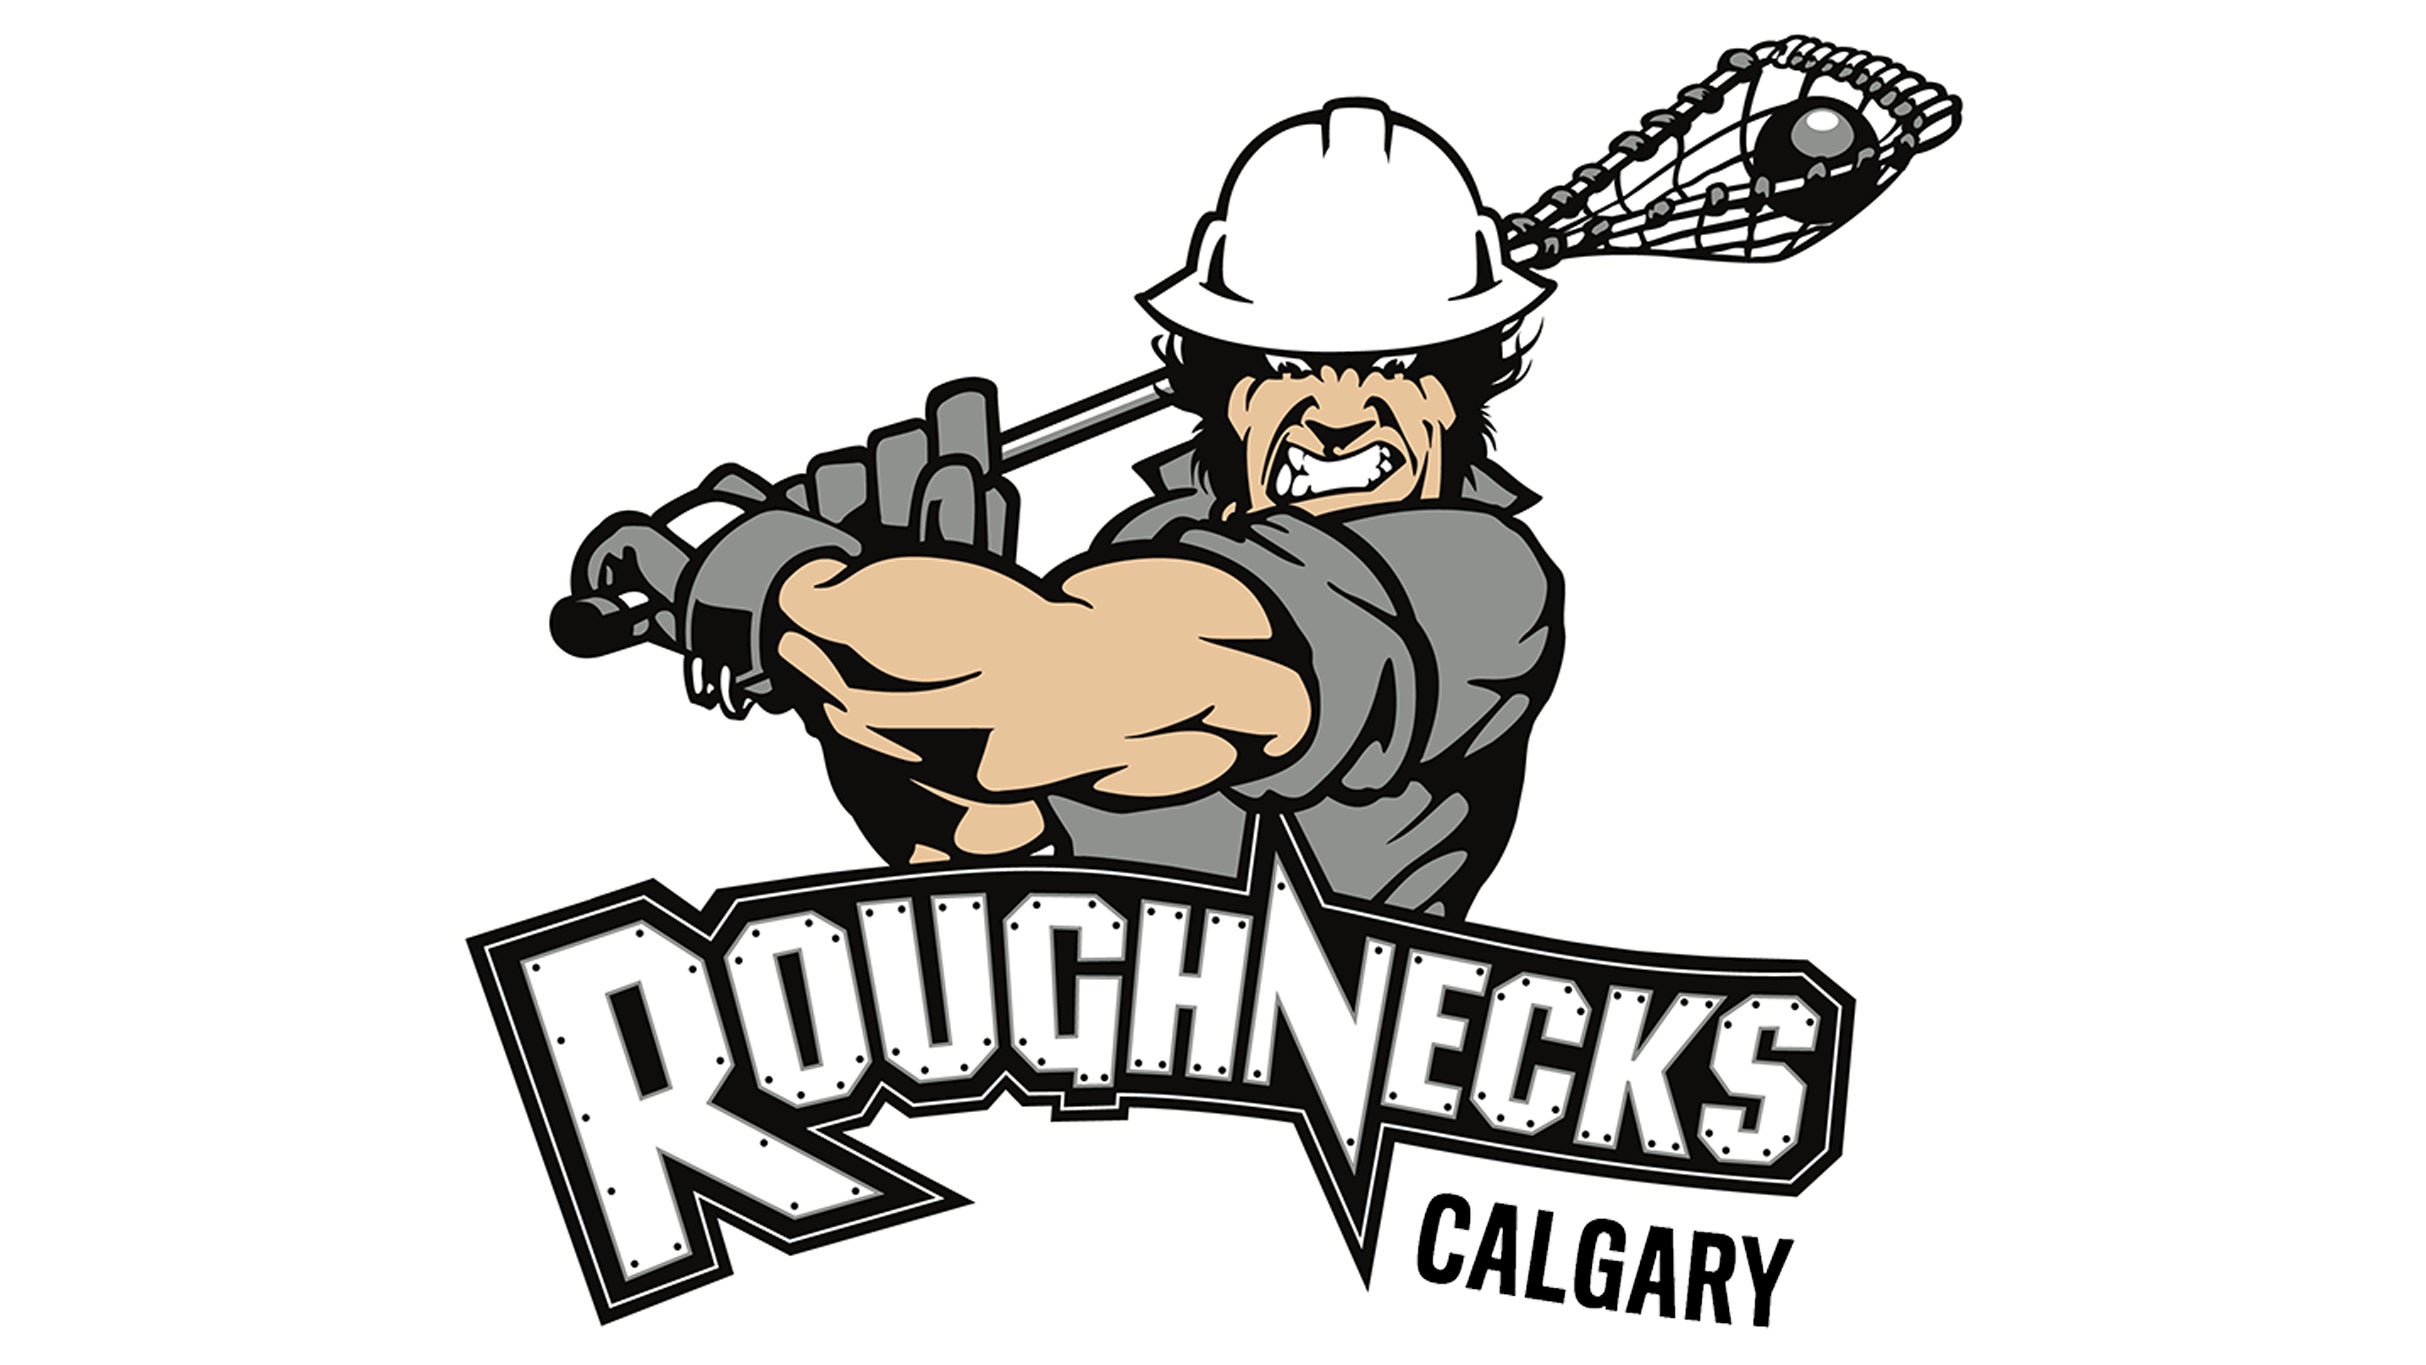 Calgary Roughnecks vs. Toronto Rock in Calgary promo photo for Black Friday  presale offer code